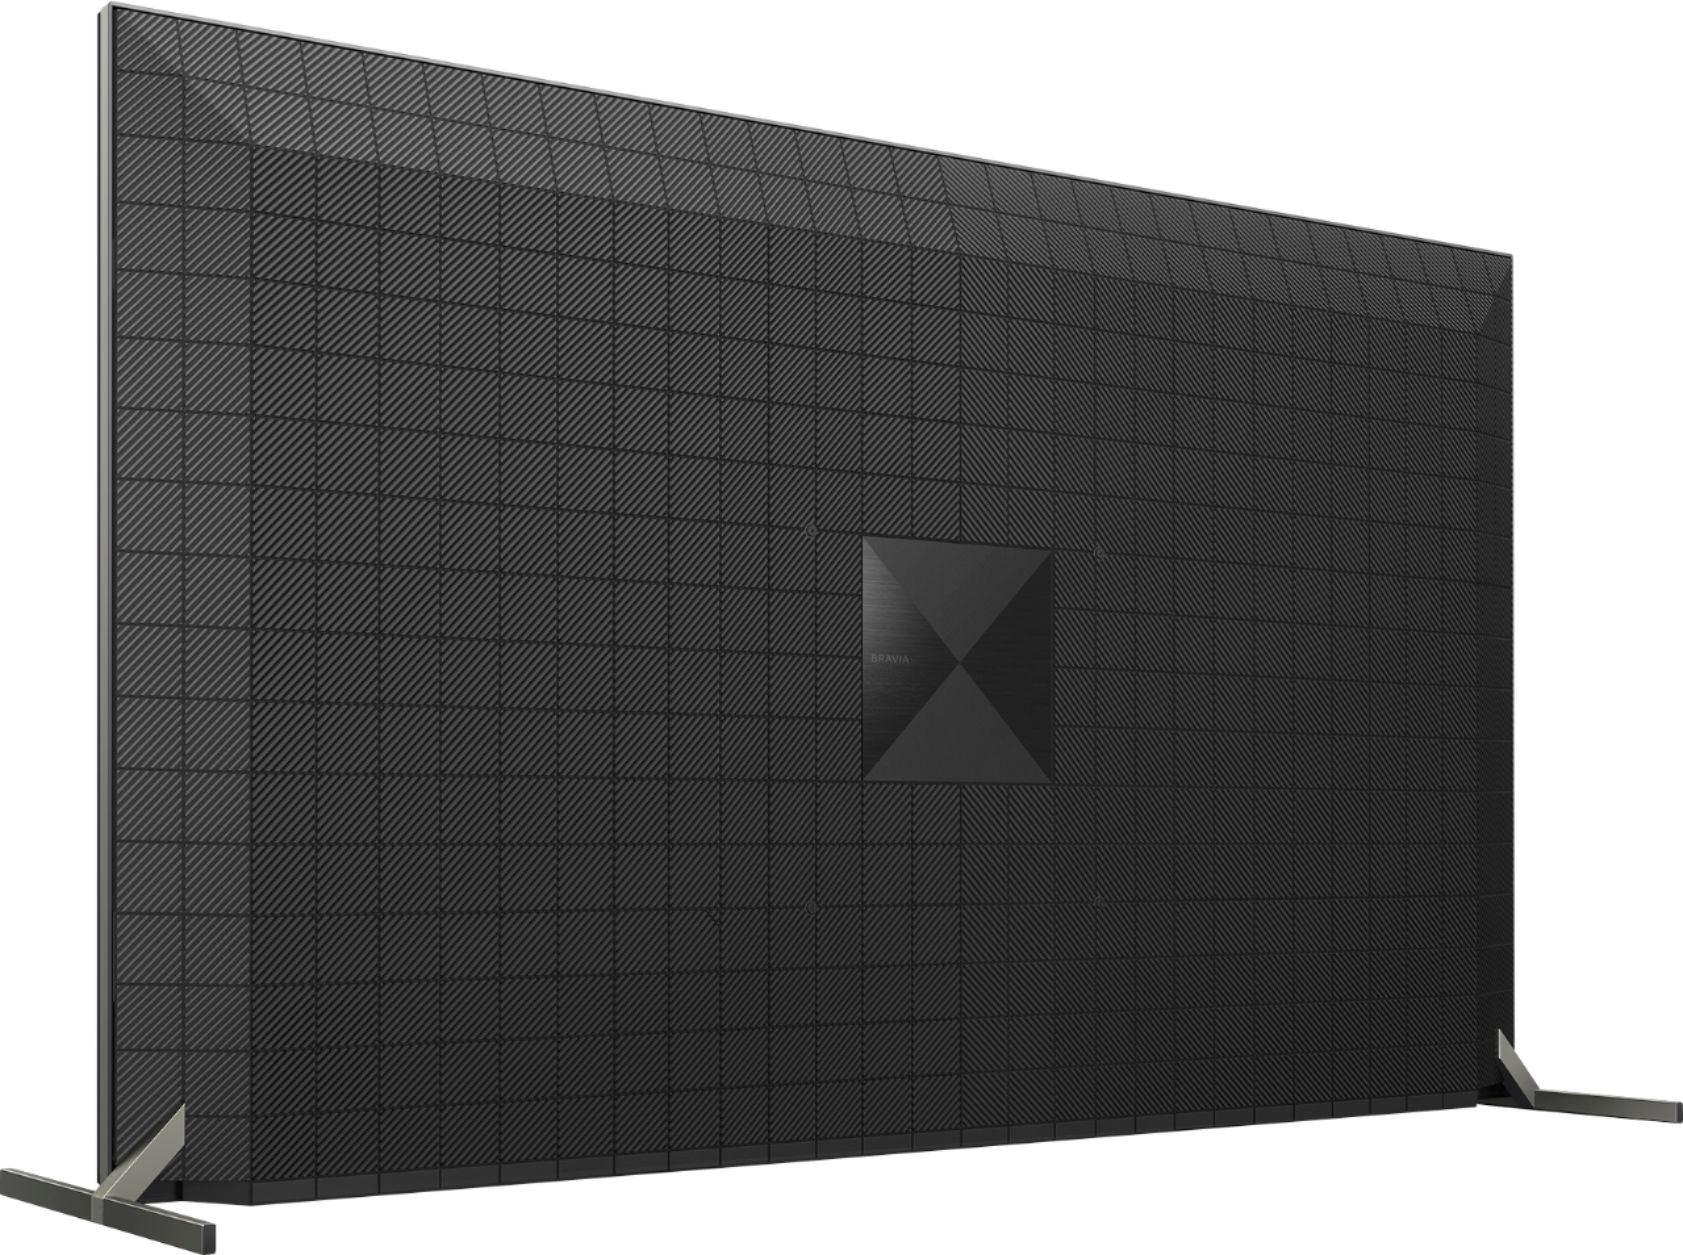 Angle View: Sony - 75" Class BRAVIA XR Z9J LED 8K UHD Smart Google TV